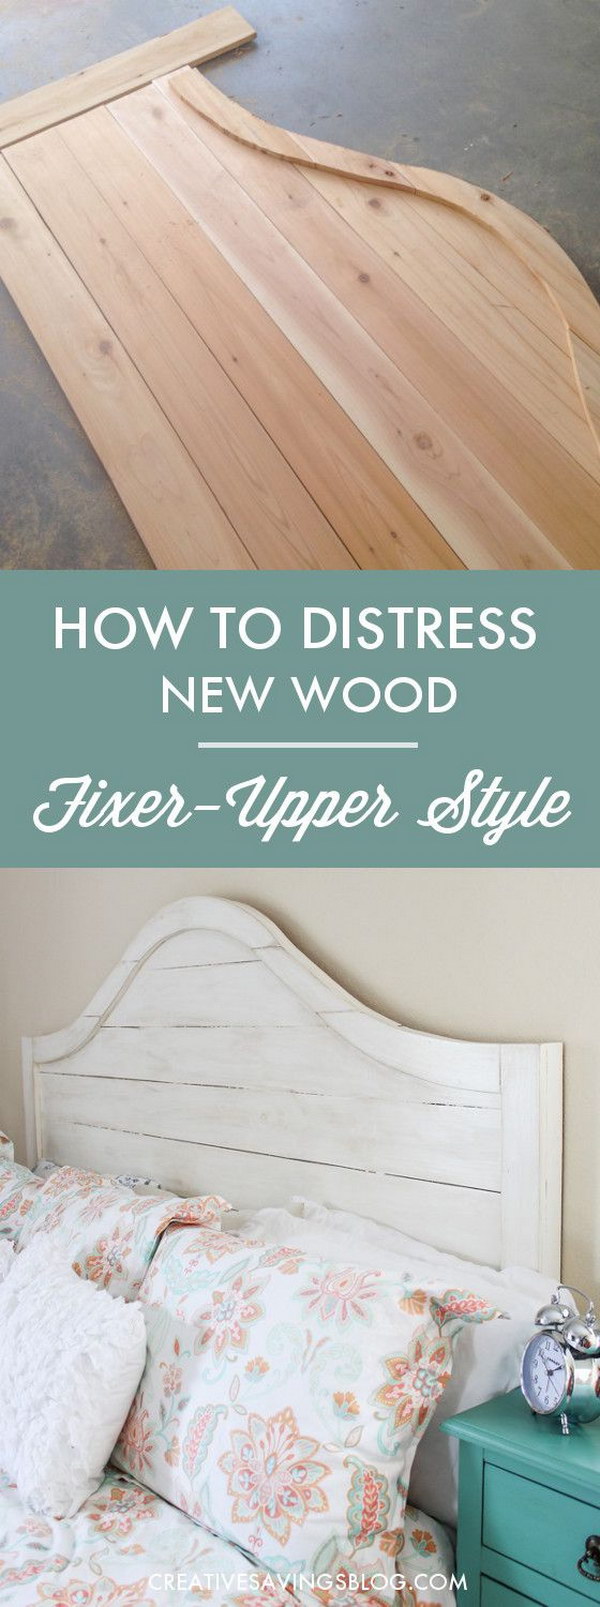 Distress New Wood to Shabby Chic Style Headboard 